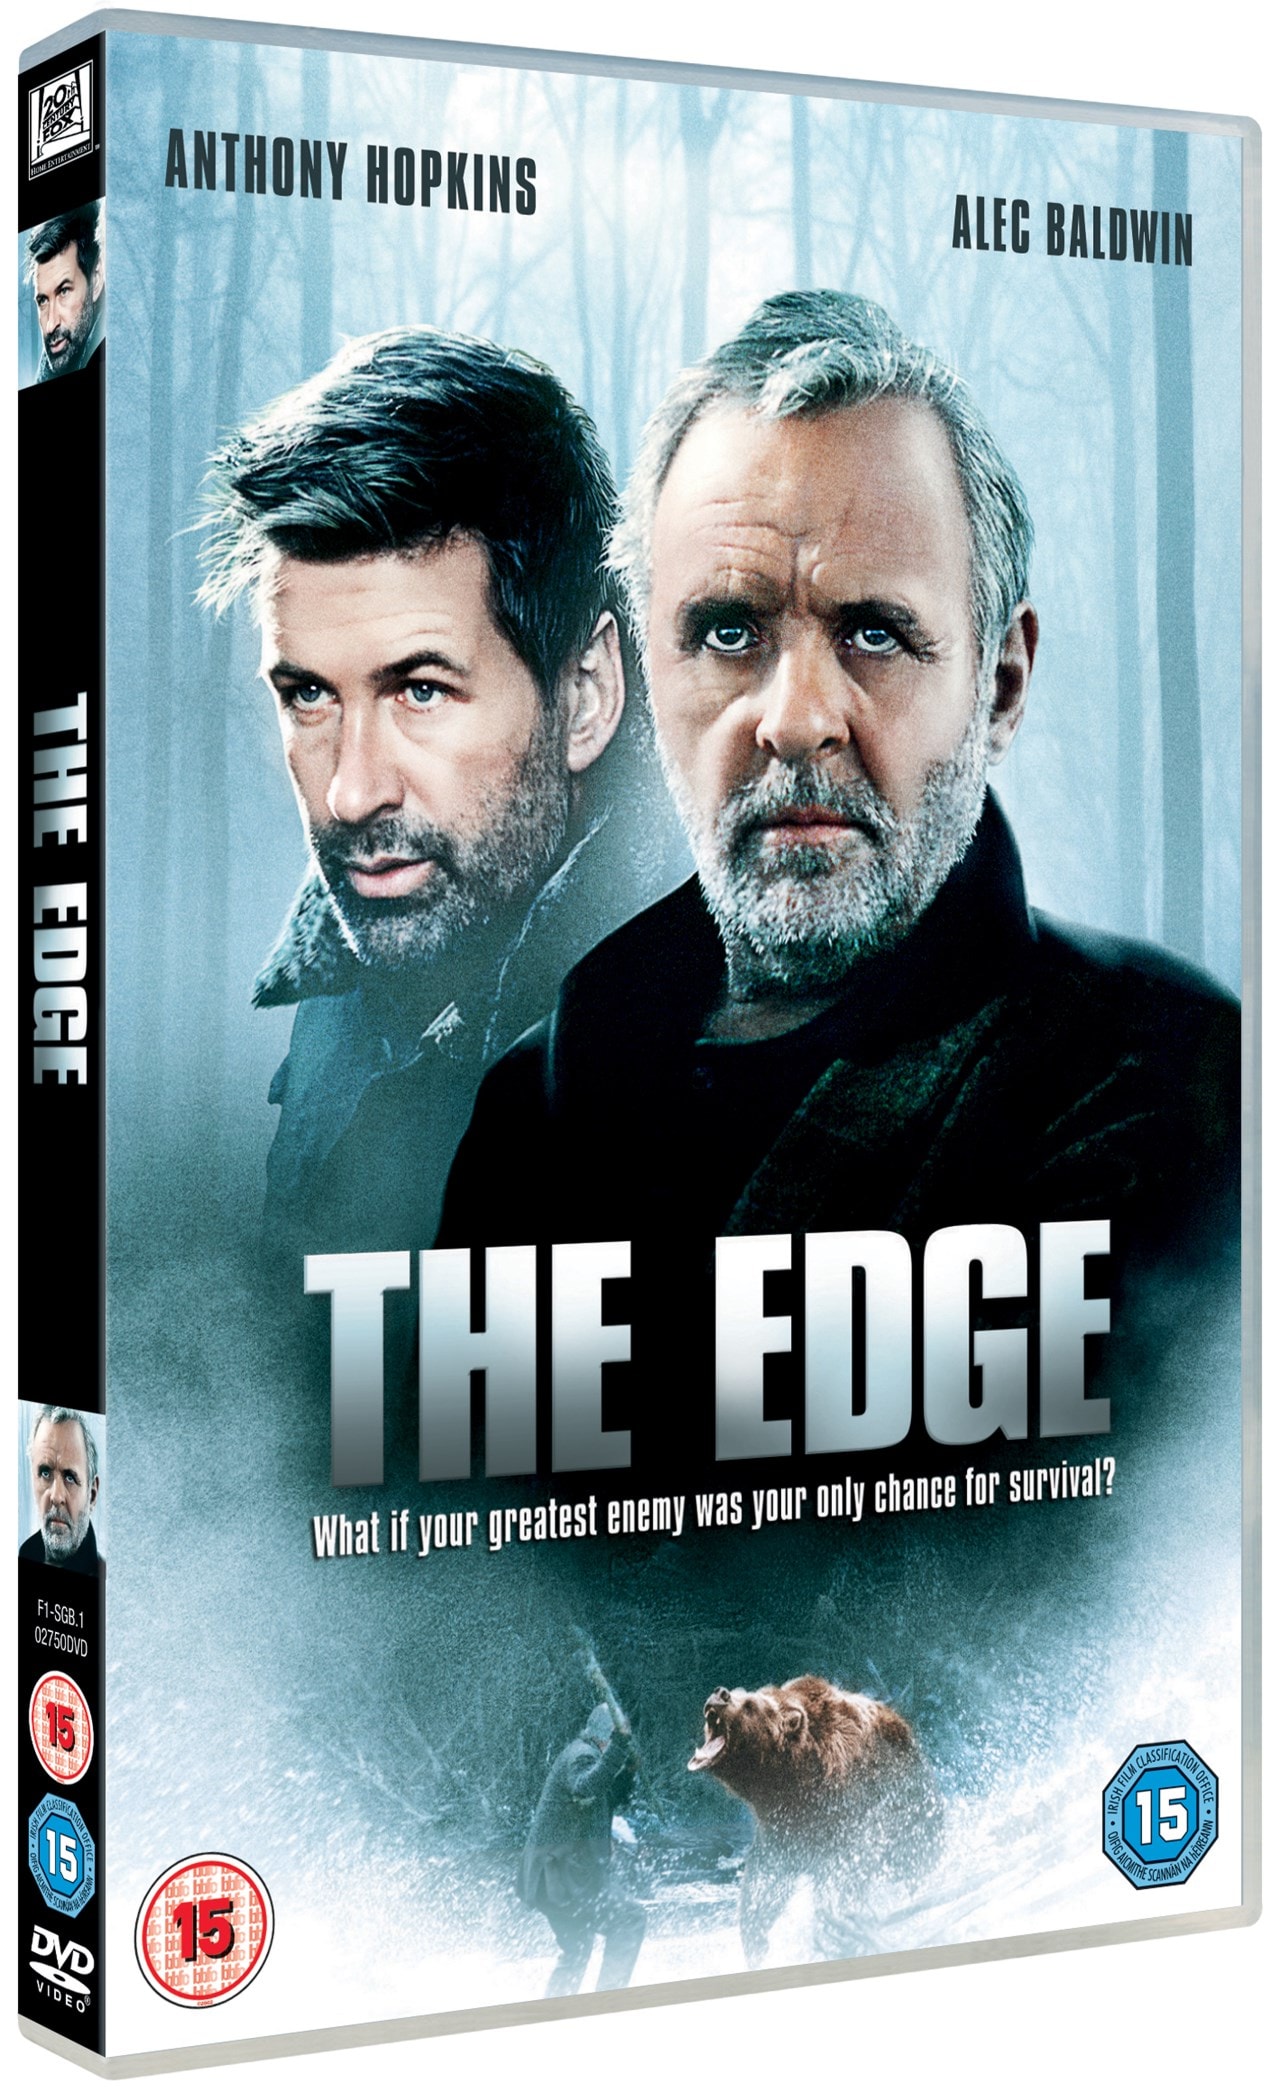 the edge movie